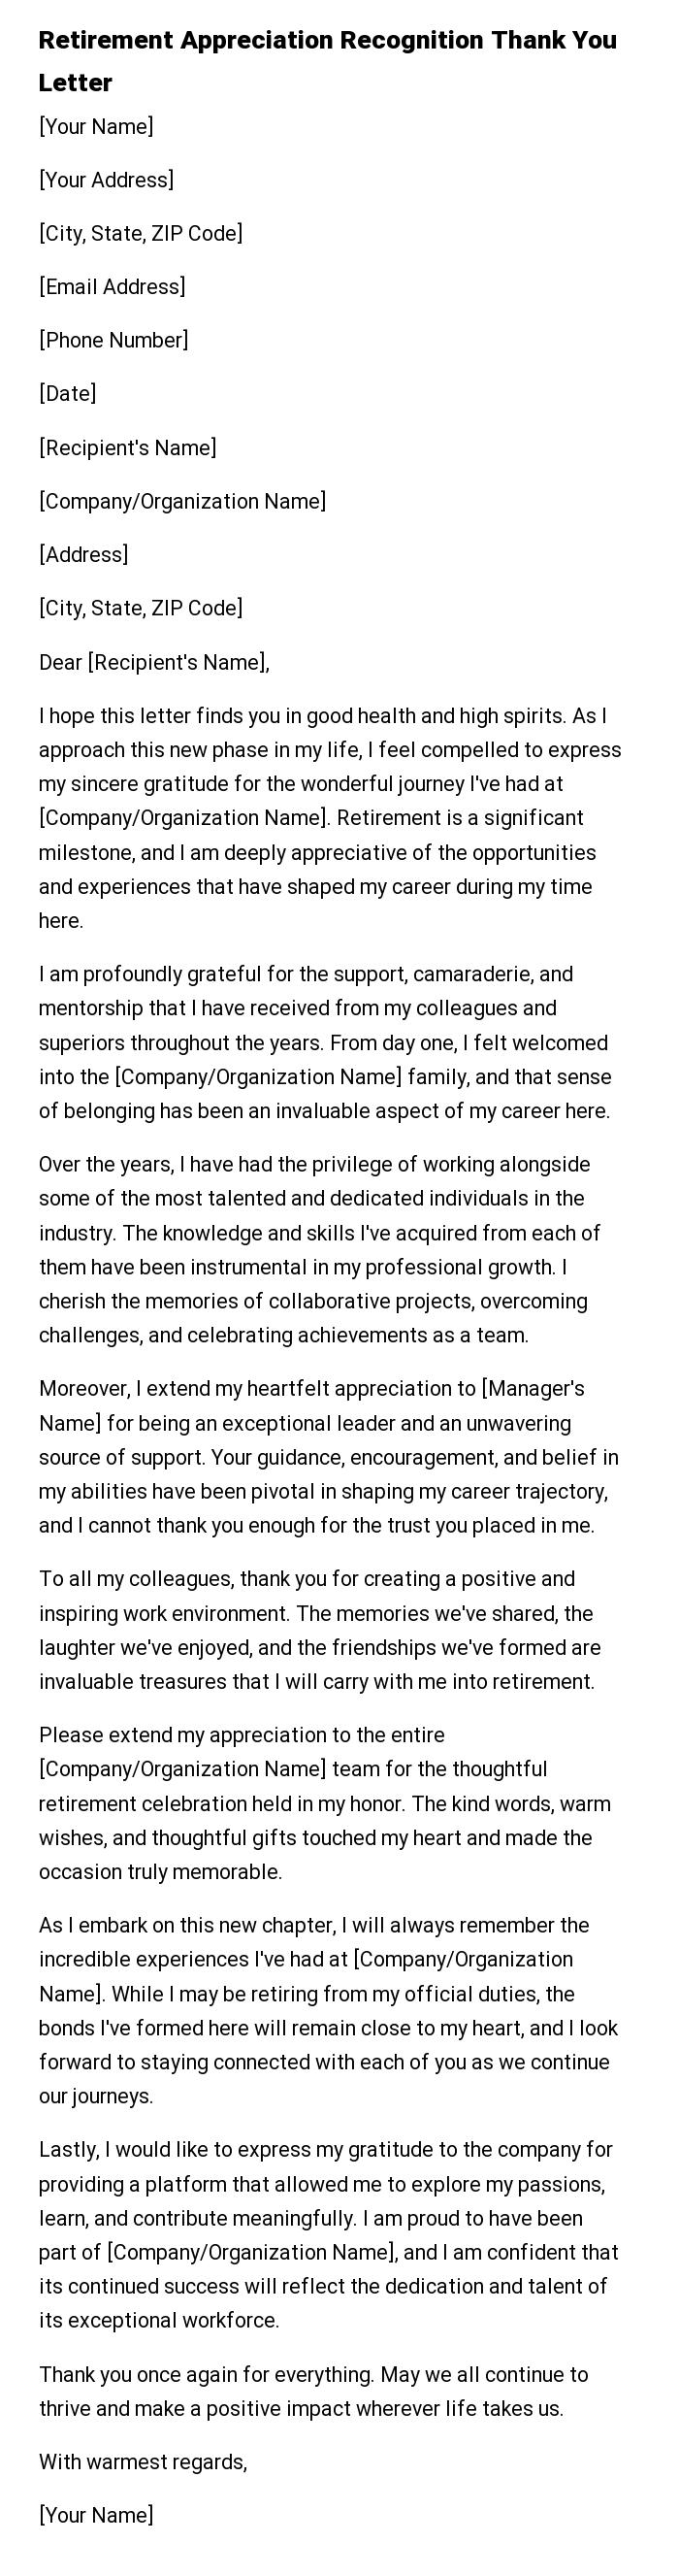 Retirement Appreciation Recognition Thank You Letter